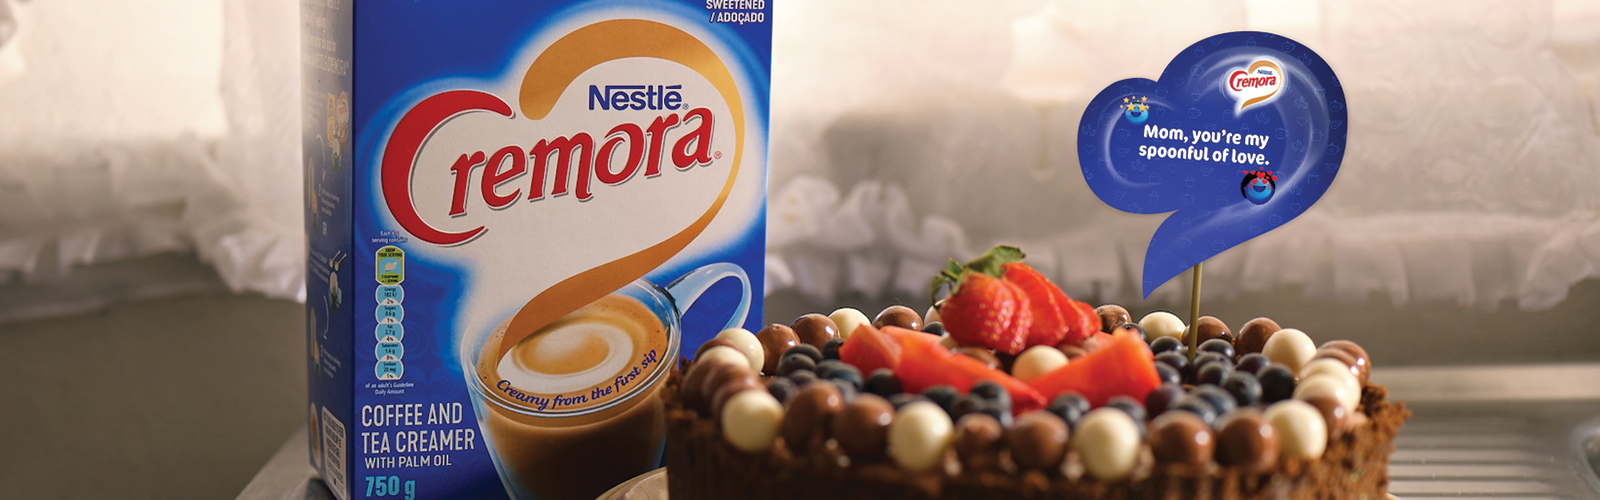 Bake More Memories With Mom - Nestle Cremora